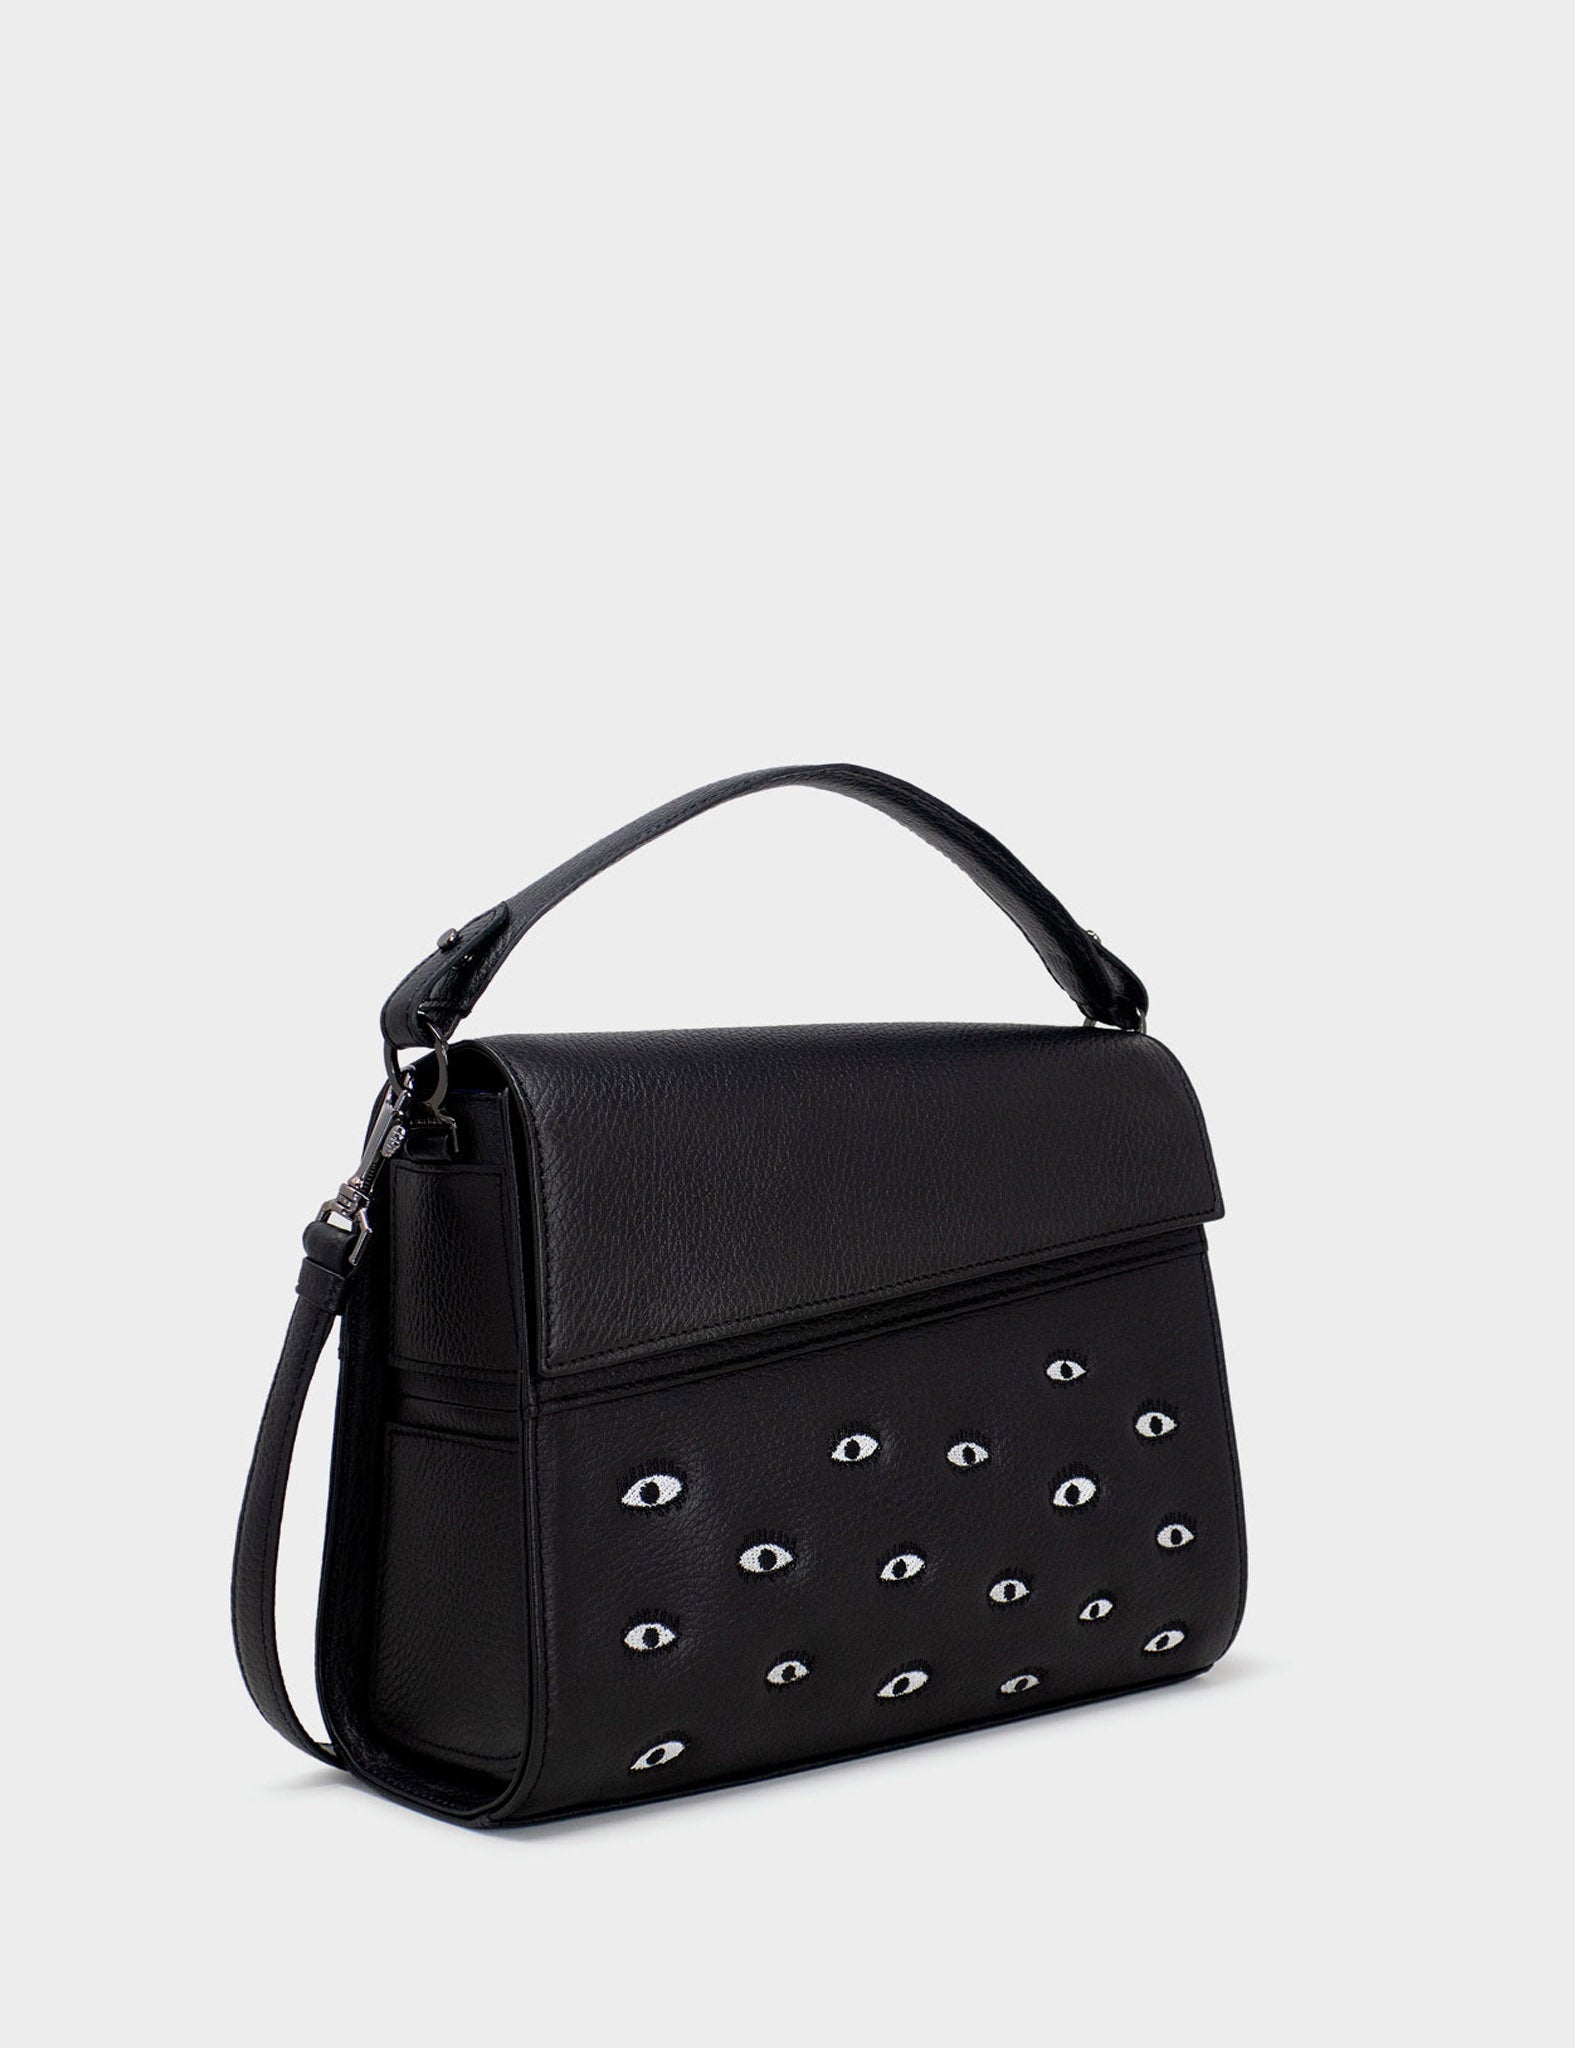 Anastasio Medium Crossbody Handbag Black Leather - Eyes Embroidery - Front corner angle view